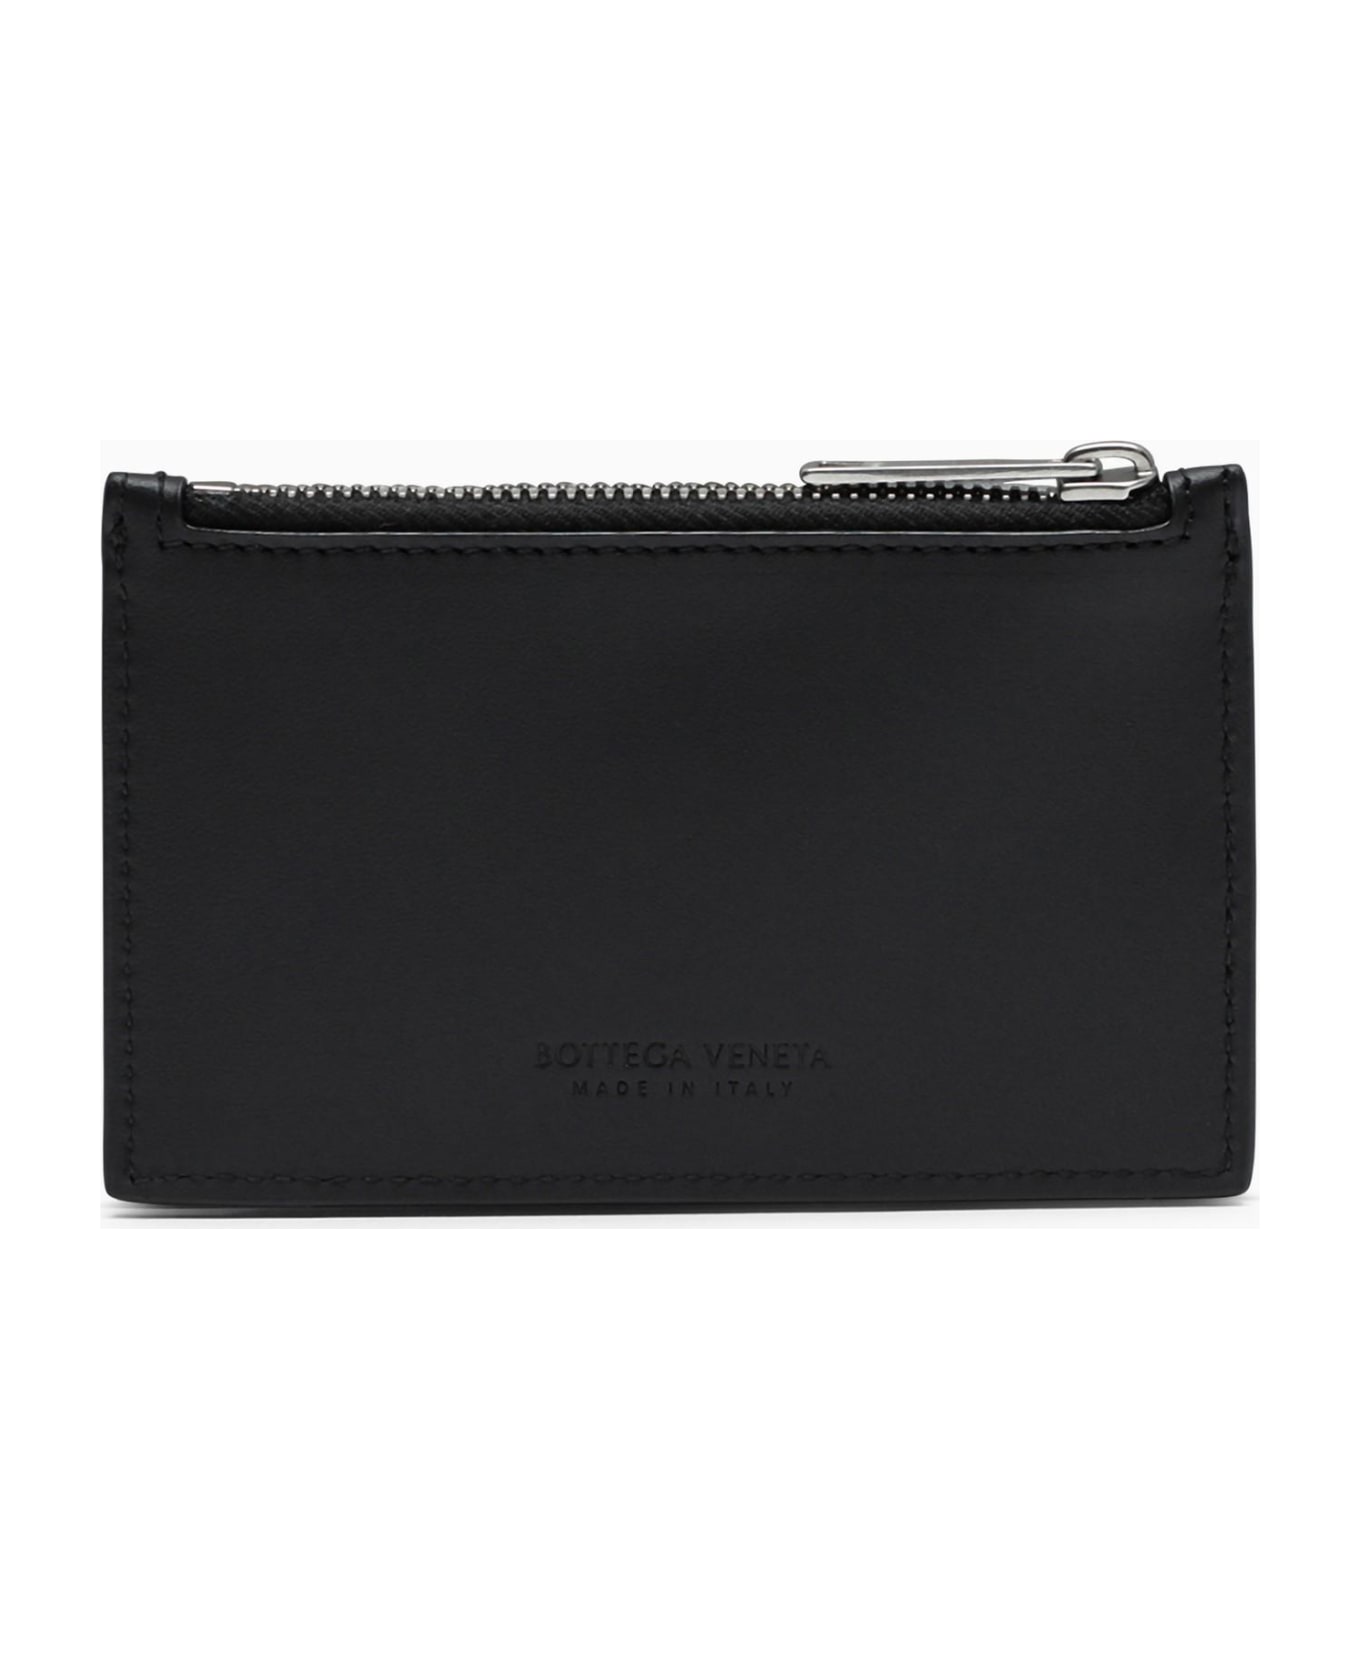 Bottega Veneta Zip Credit Card Holder - Black Silver